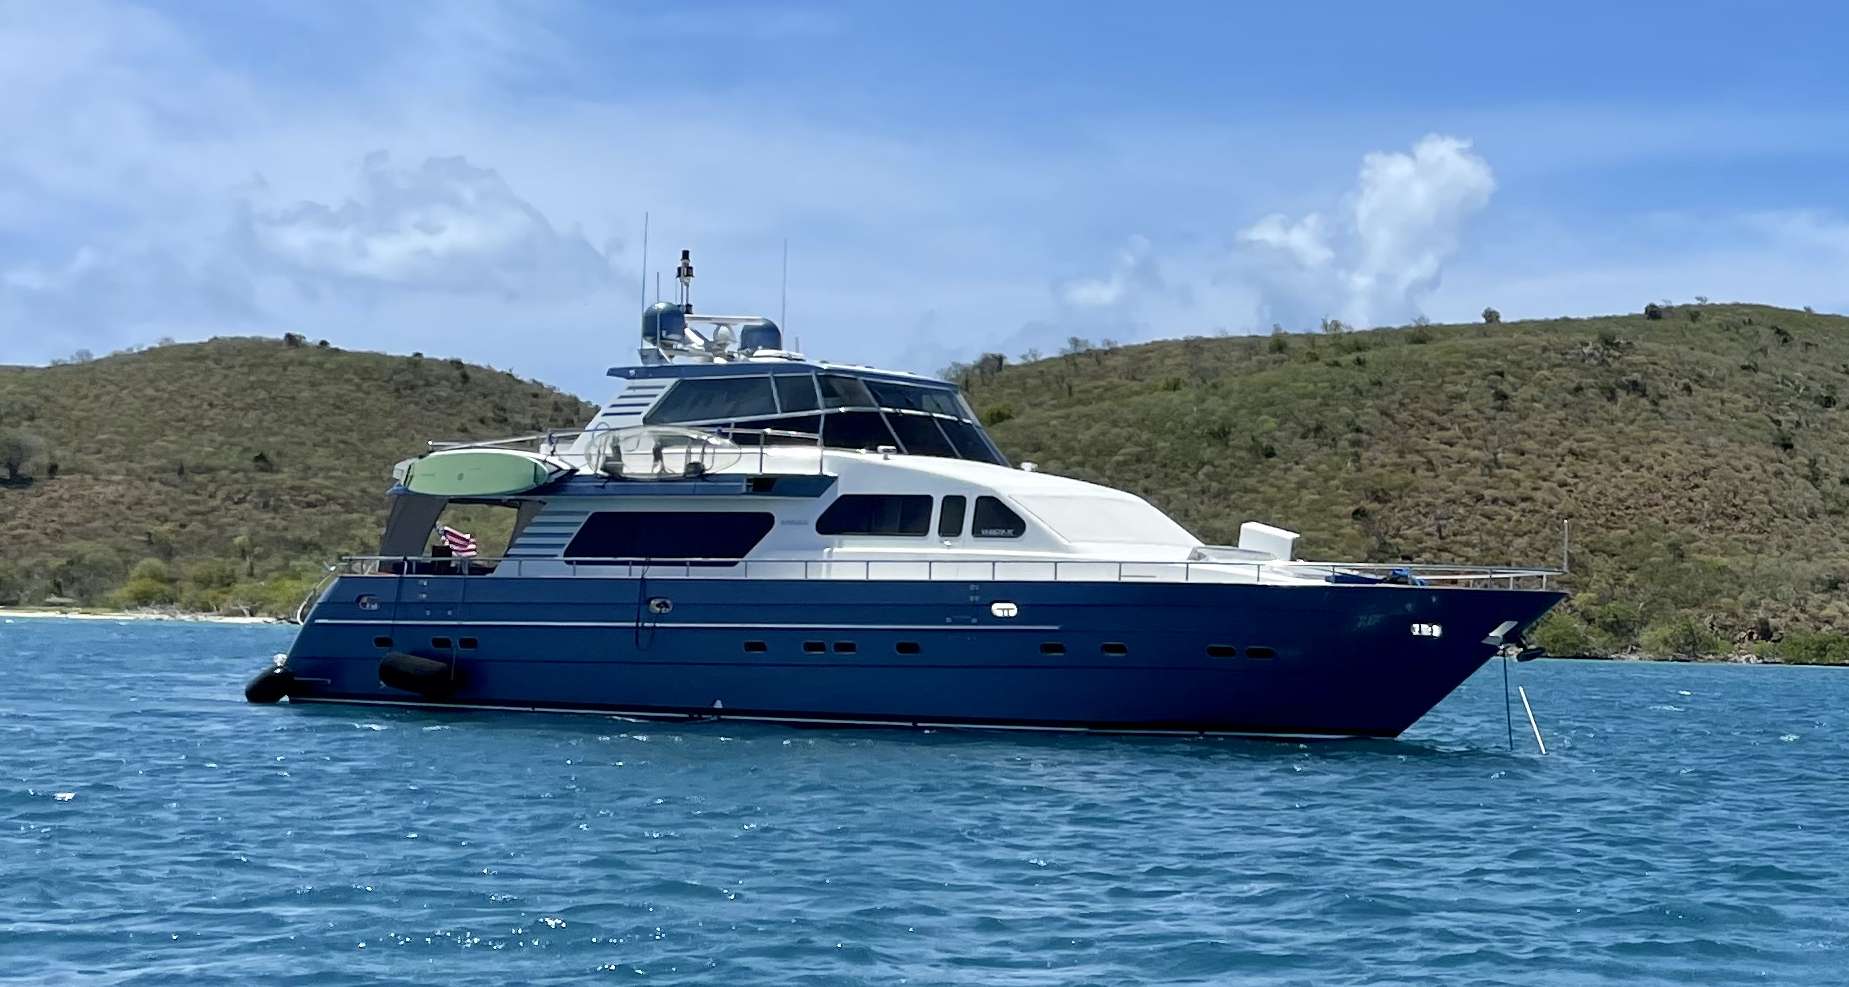 QARA - Superyacht charter British Virgin Island & Boat hire in Caribbean 1